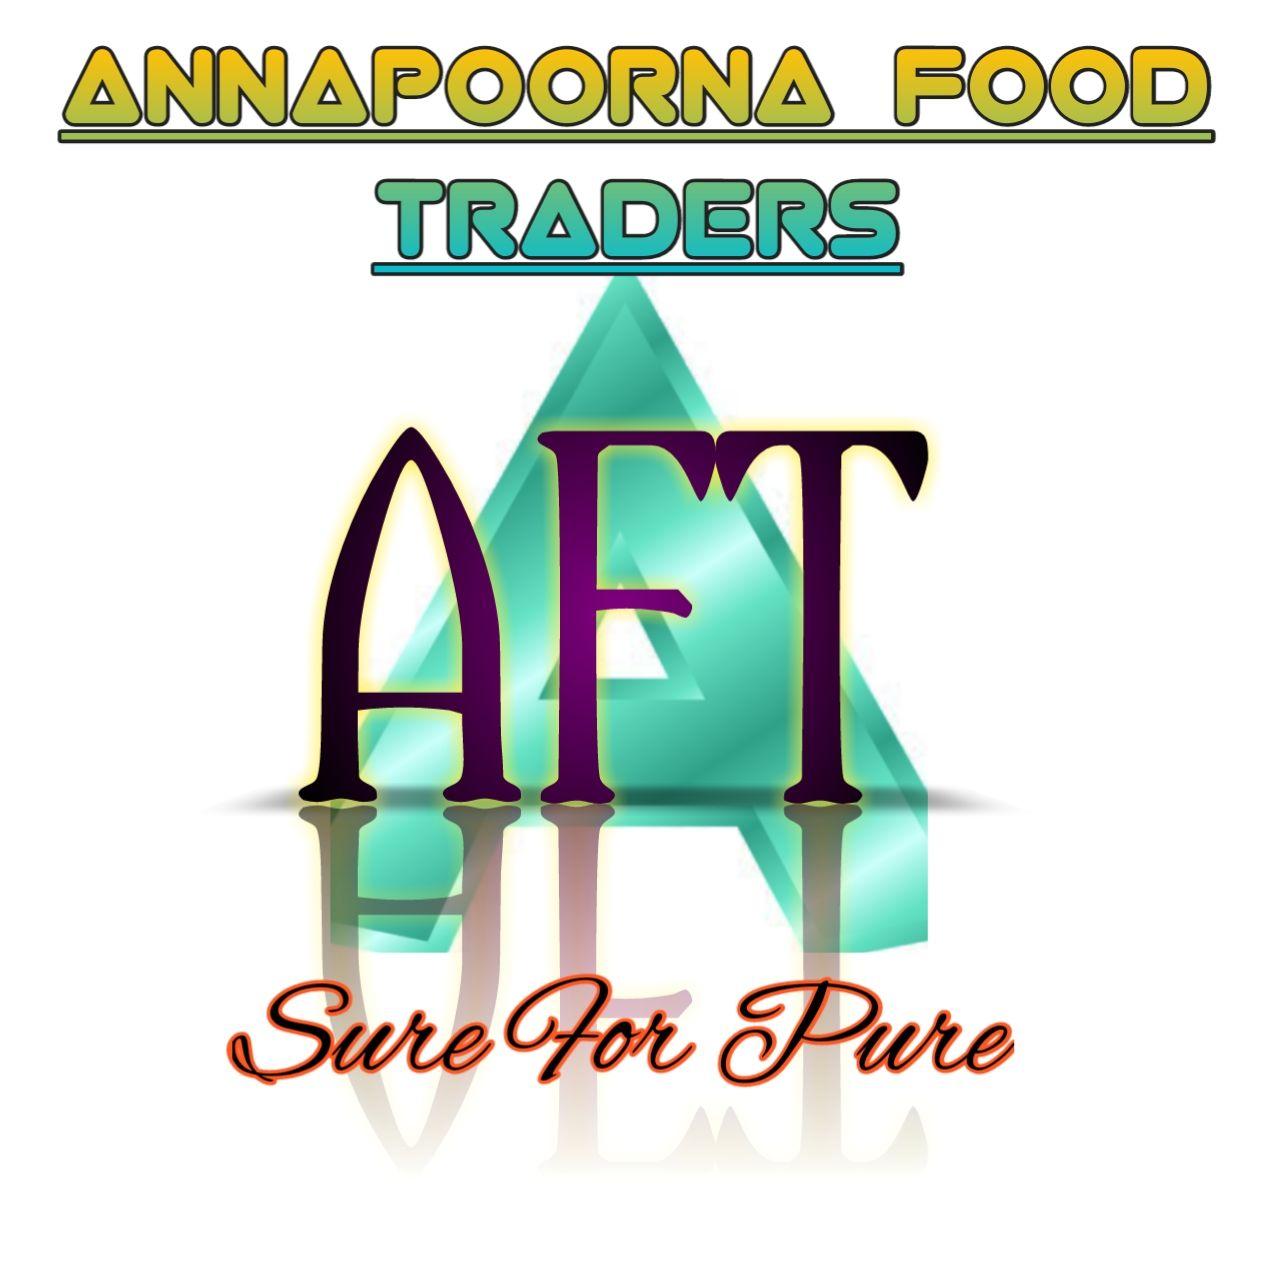 ANNAPOORNA FOOD TRADERS